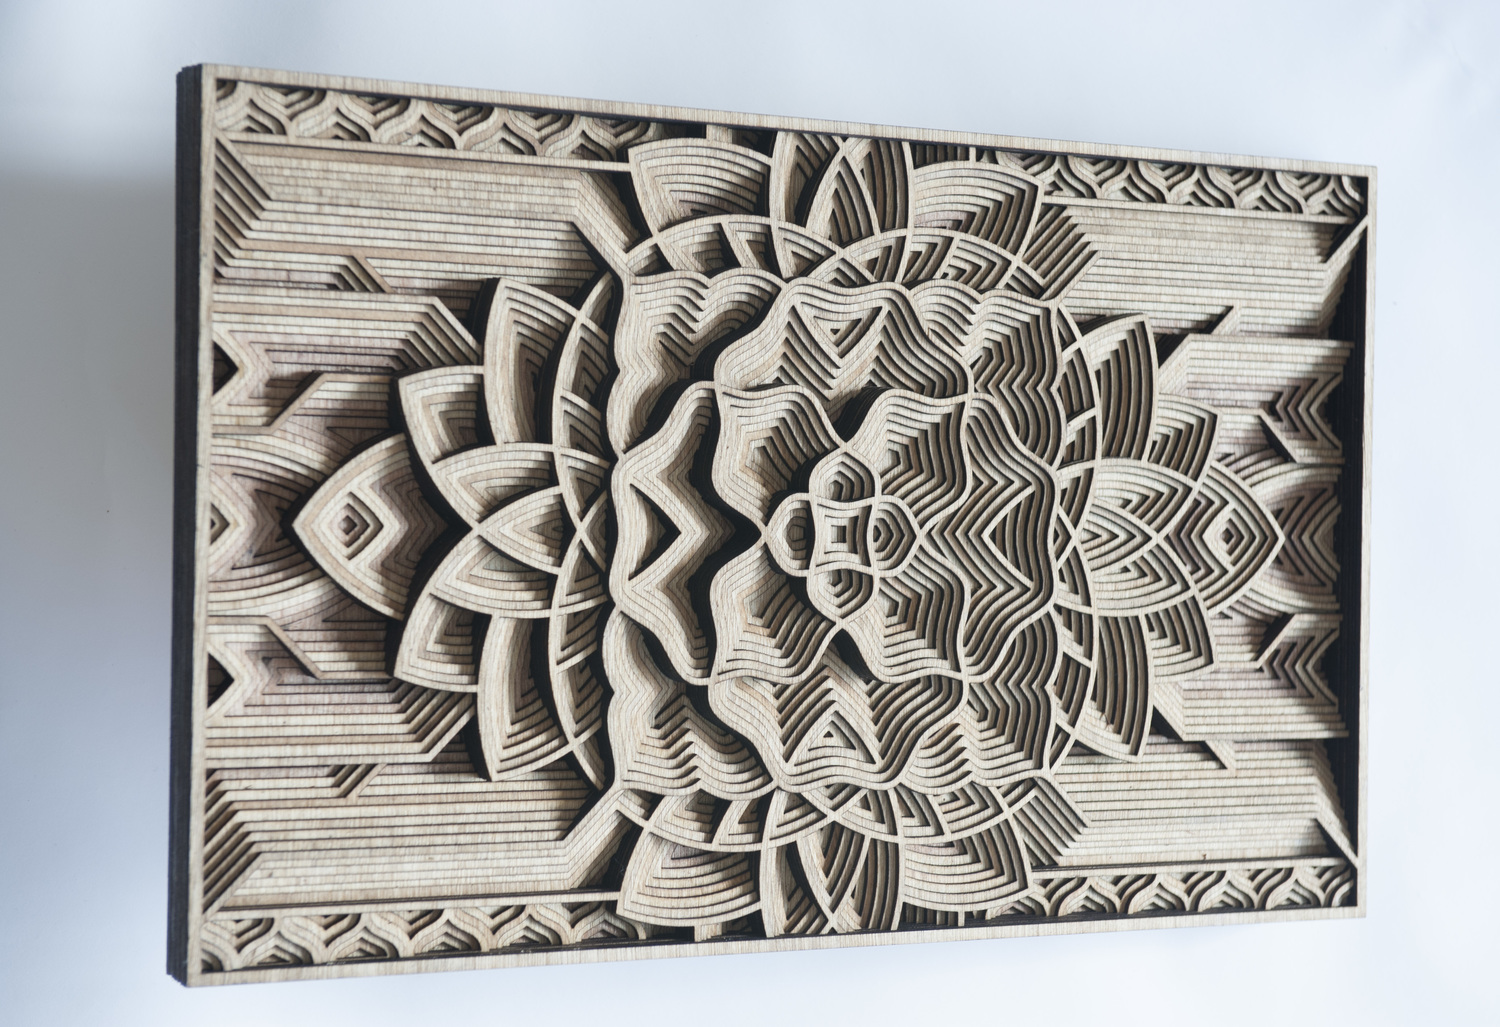 Artist Creates Stunning Wooden Sculptures With Laser Cutting Tech